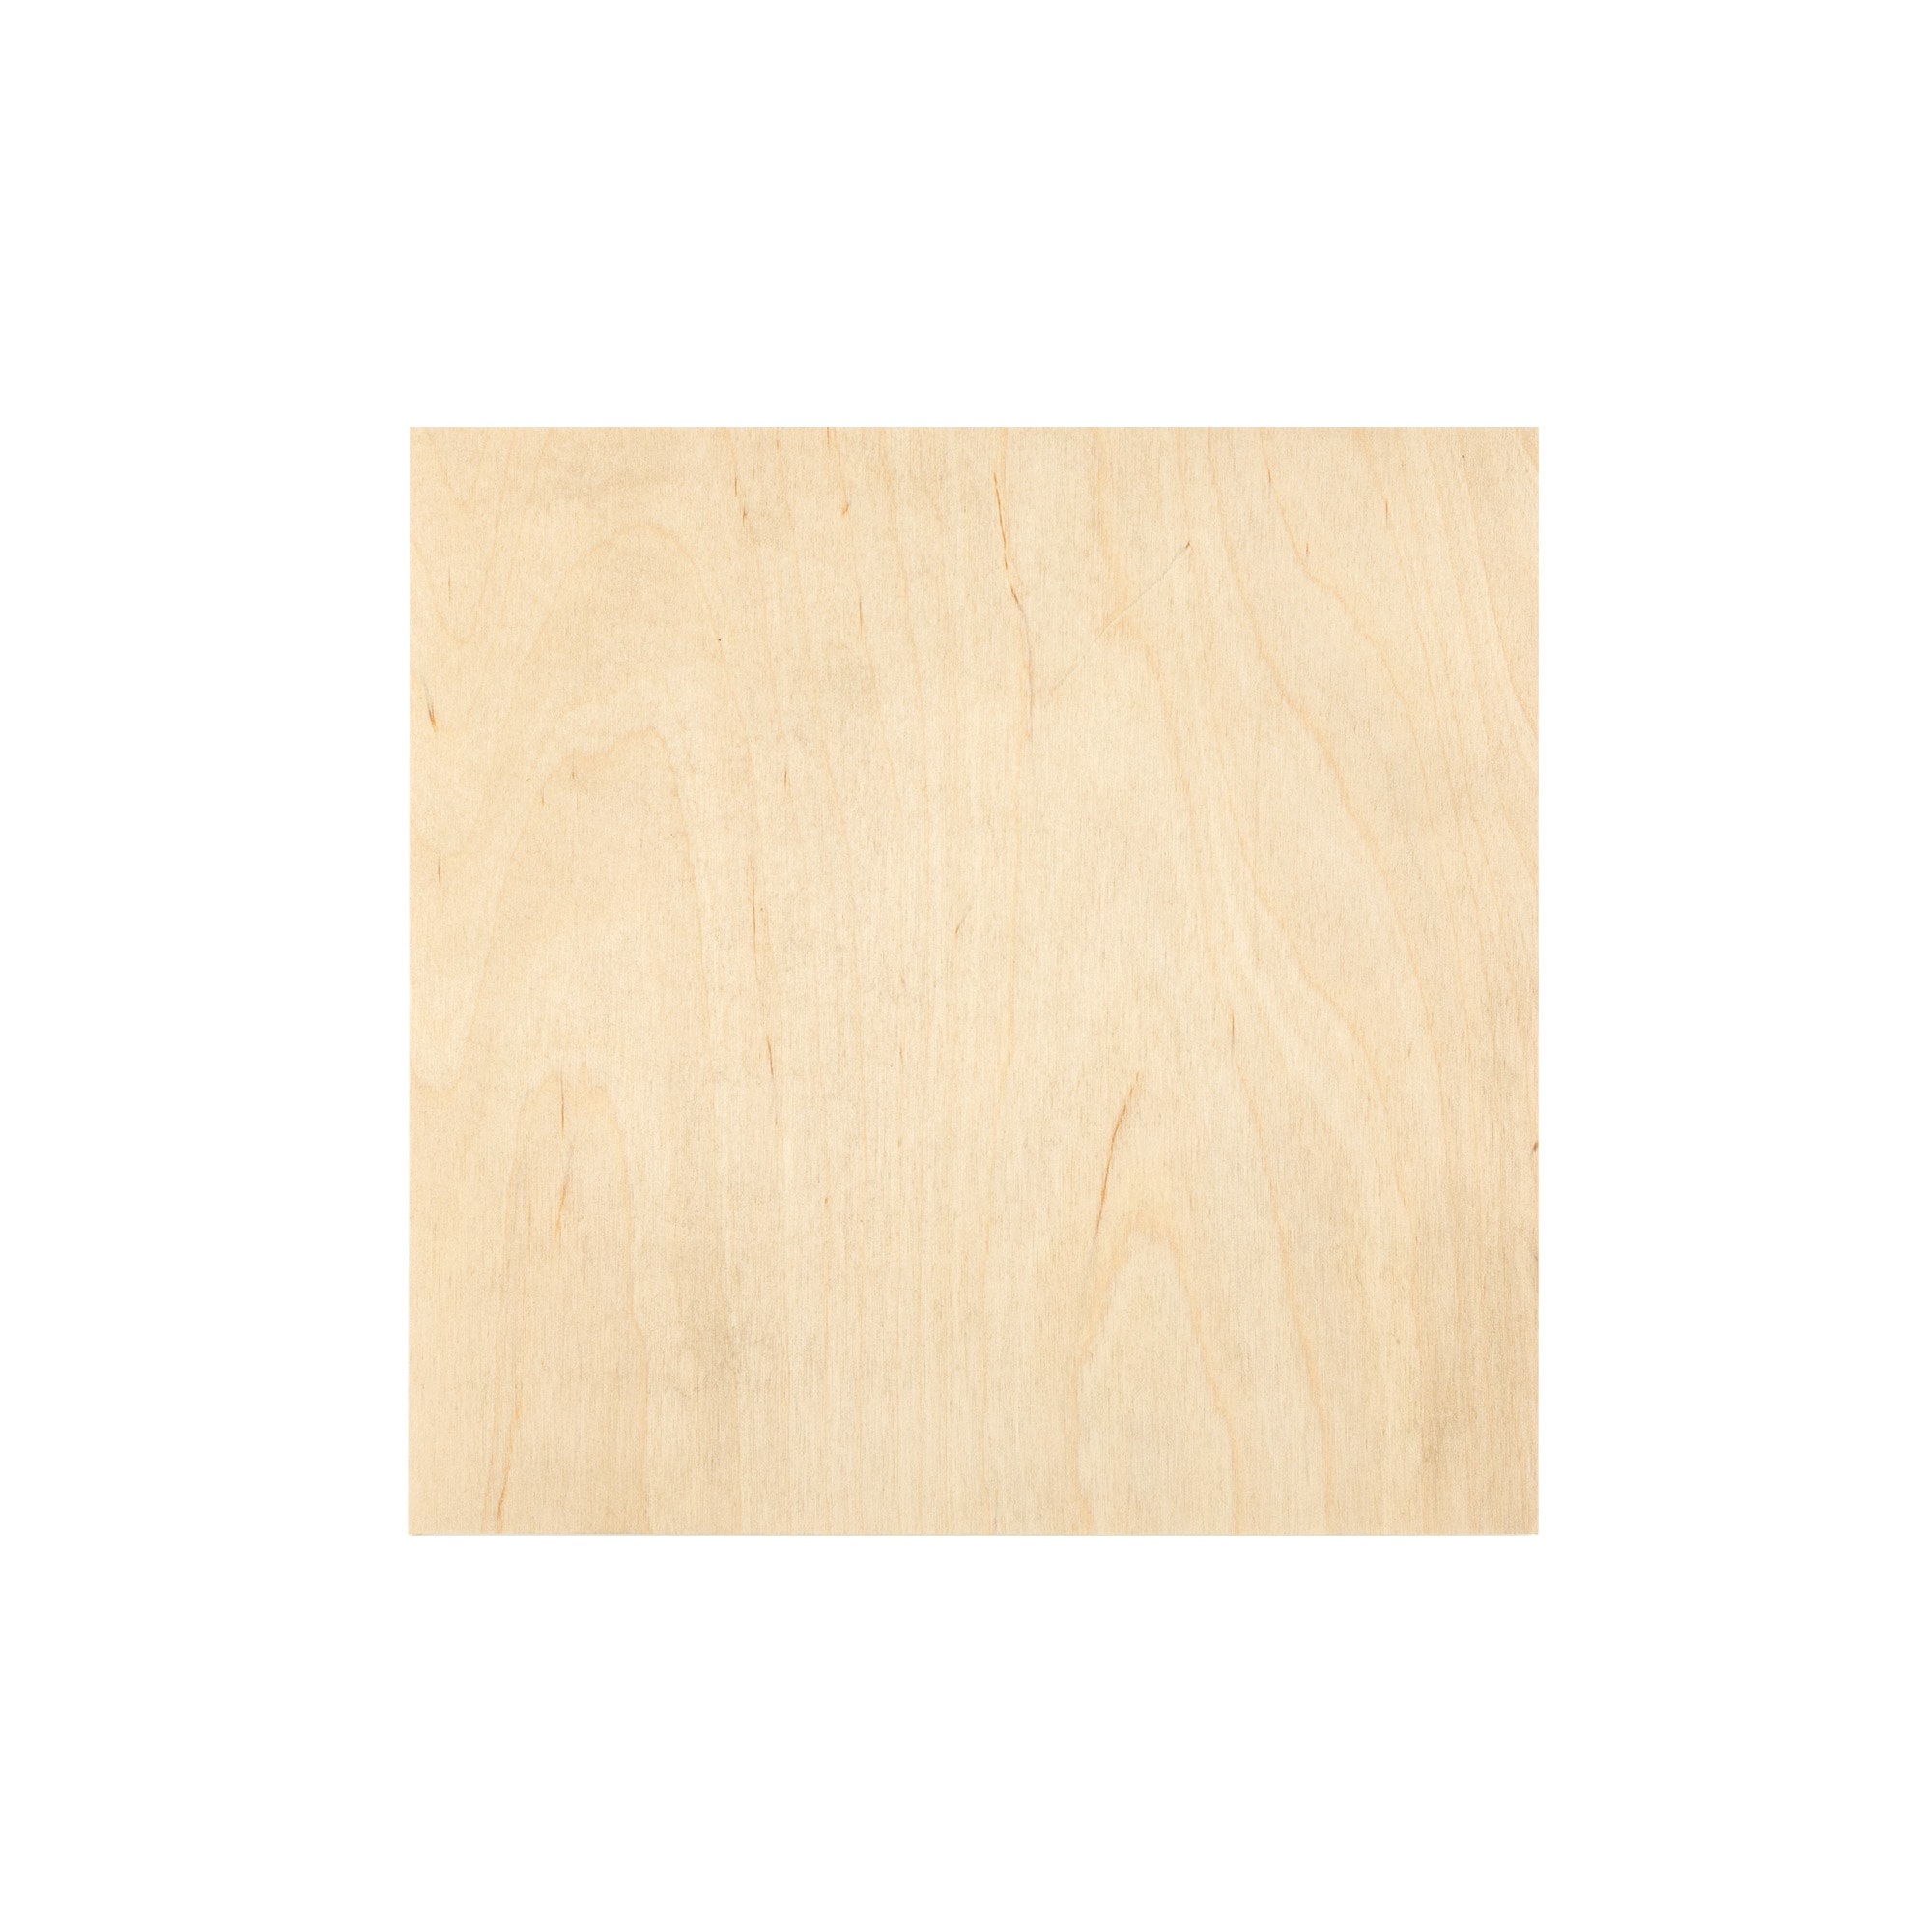 Handprint 92418 Lauan Plywood, 1/4-In. x 2 x 4-Ft.